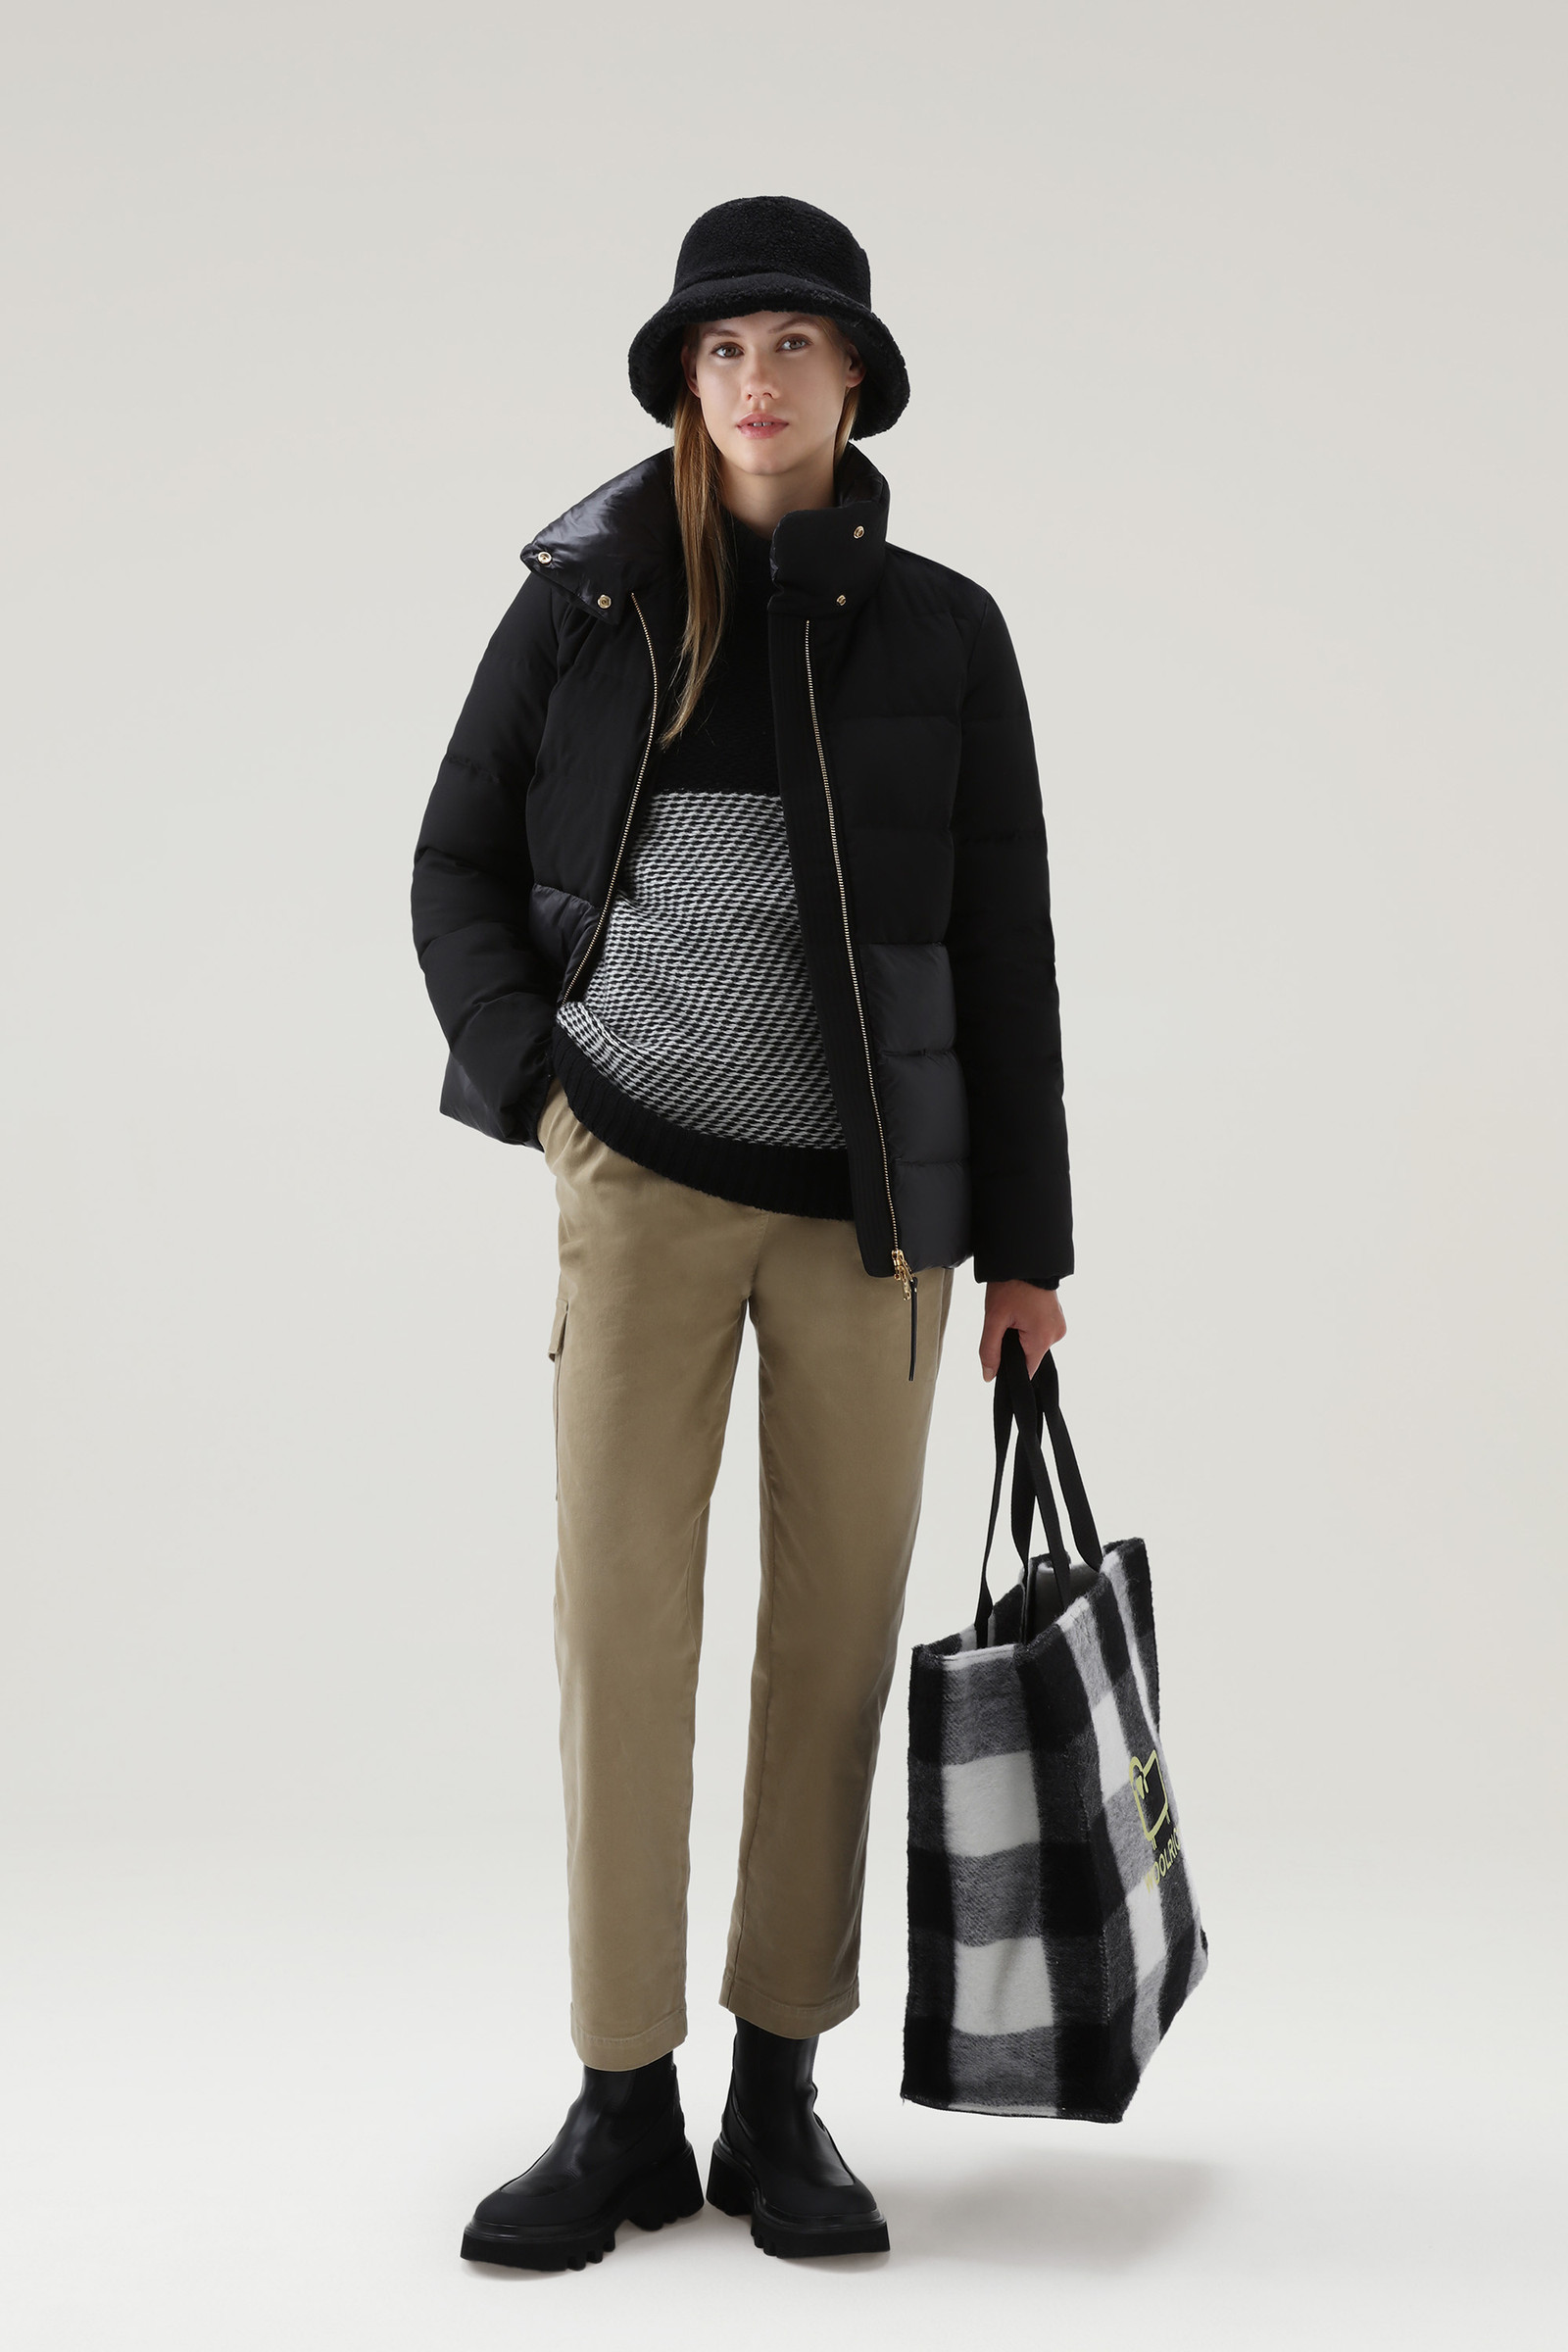 Women's Luxe Puffy Jacket Black | Woolrich USA